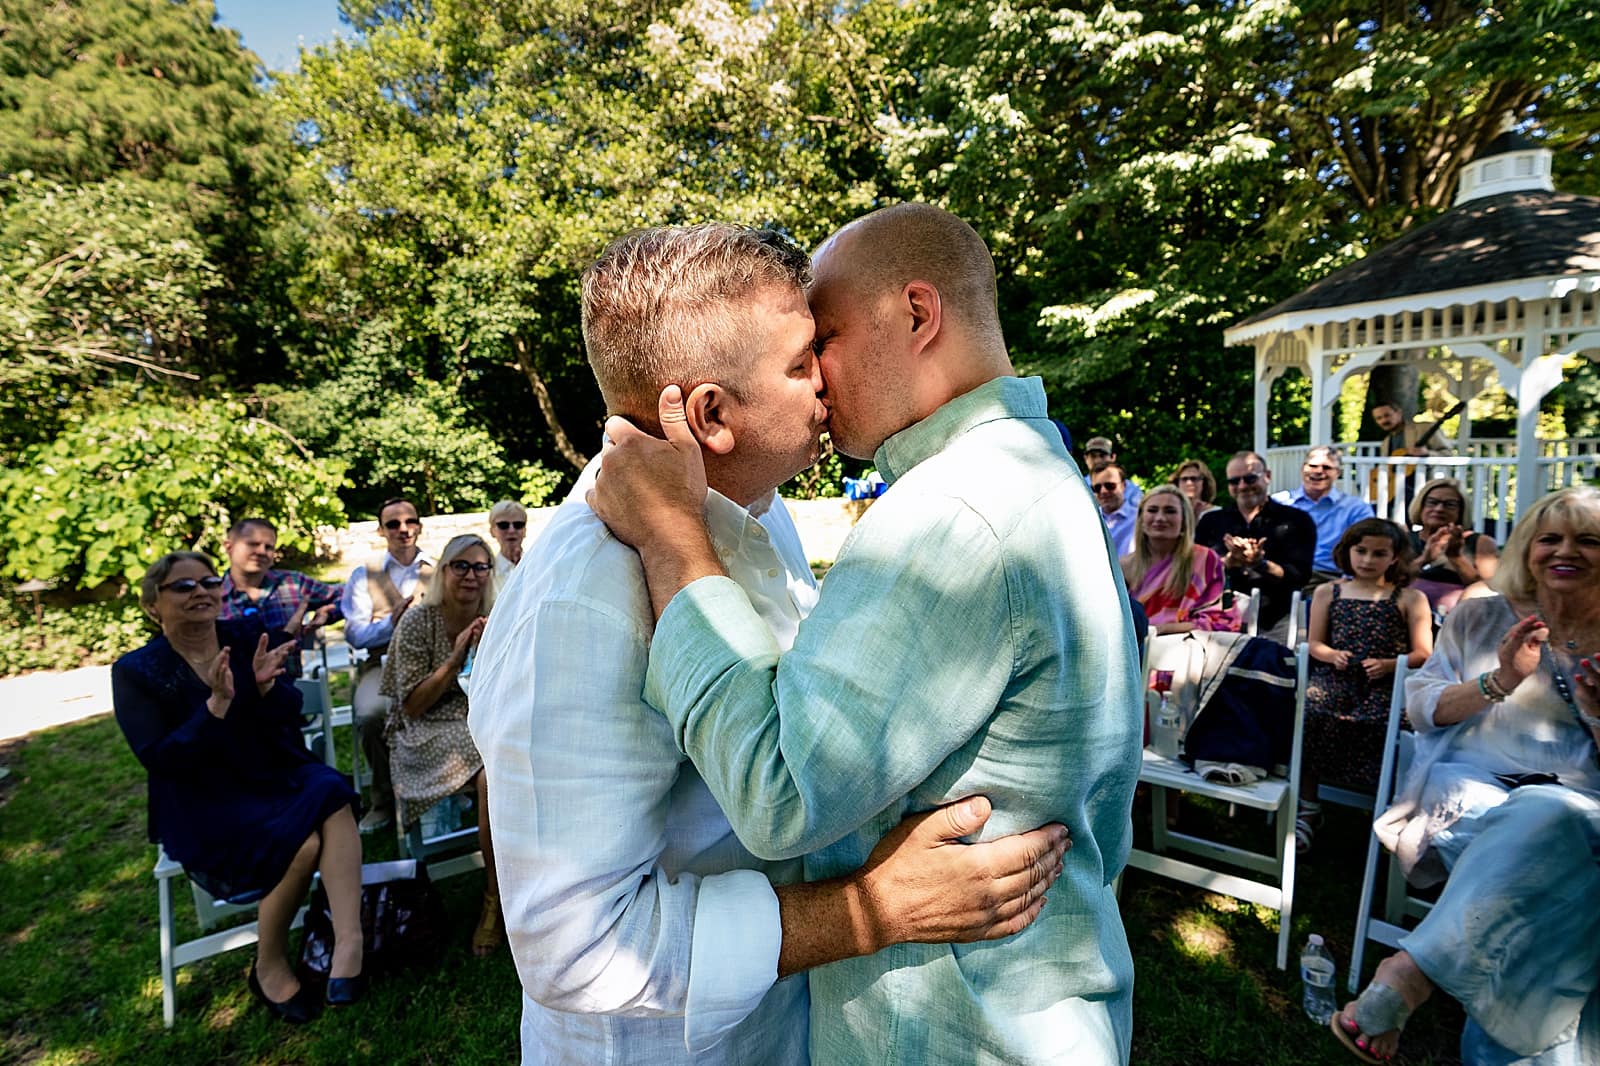 Raleigh LGBTQ wedding ceremony | photos by Kivus & Camera